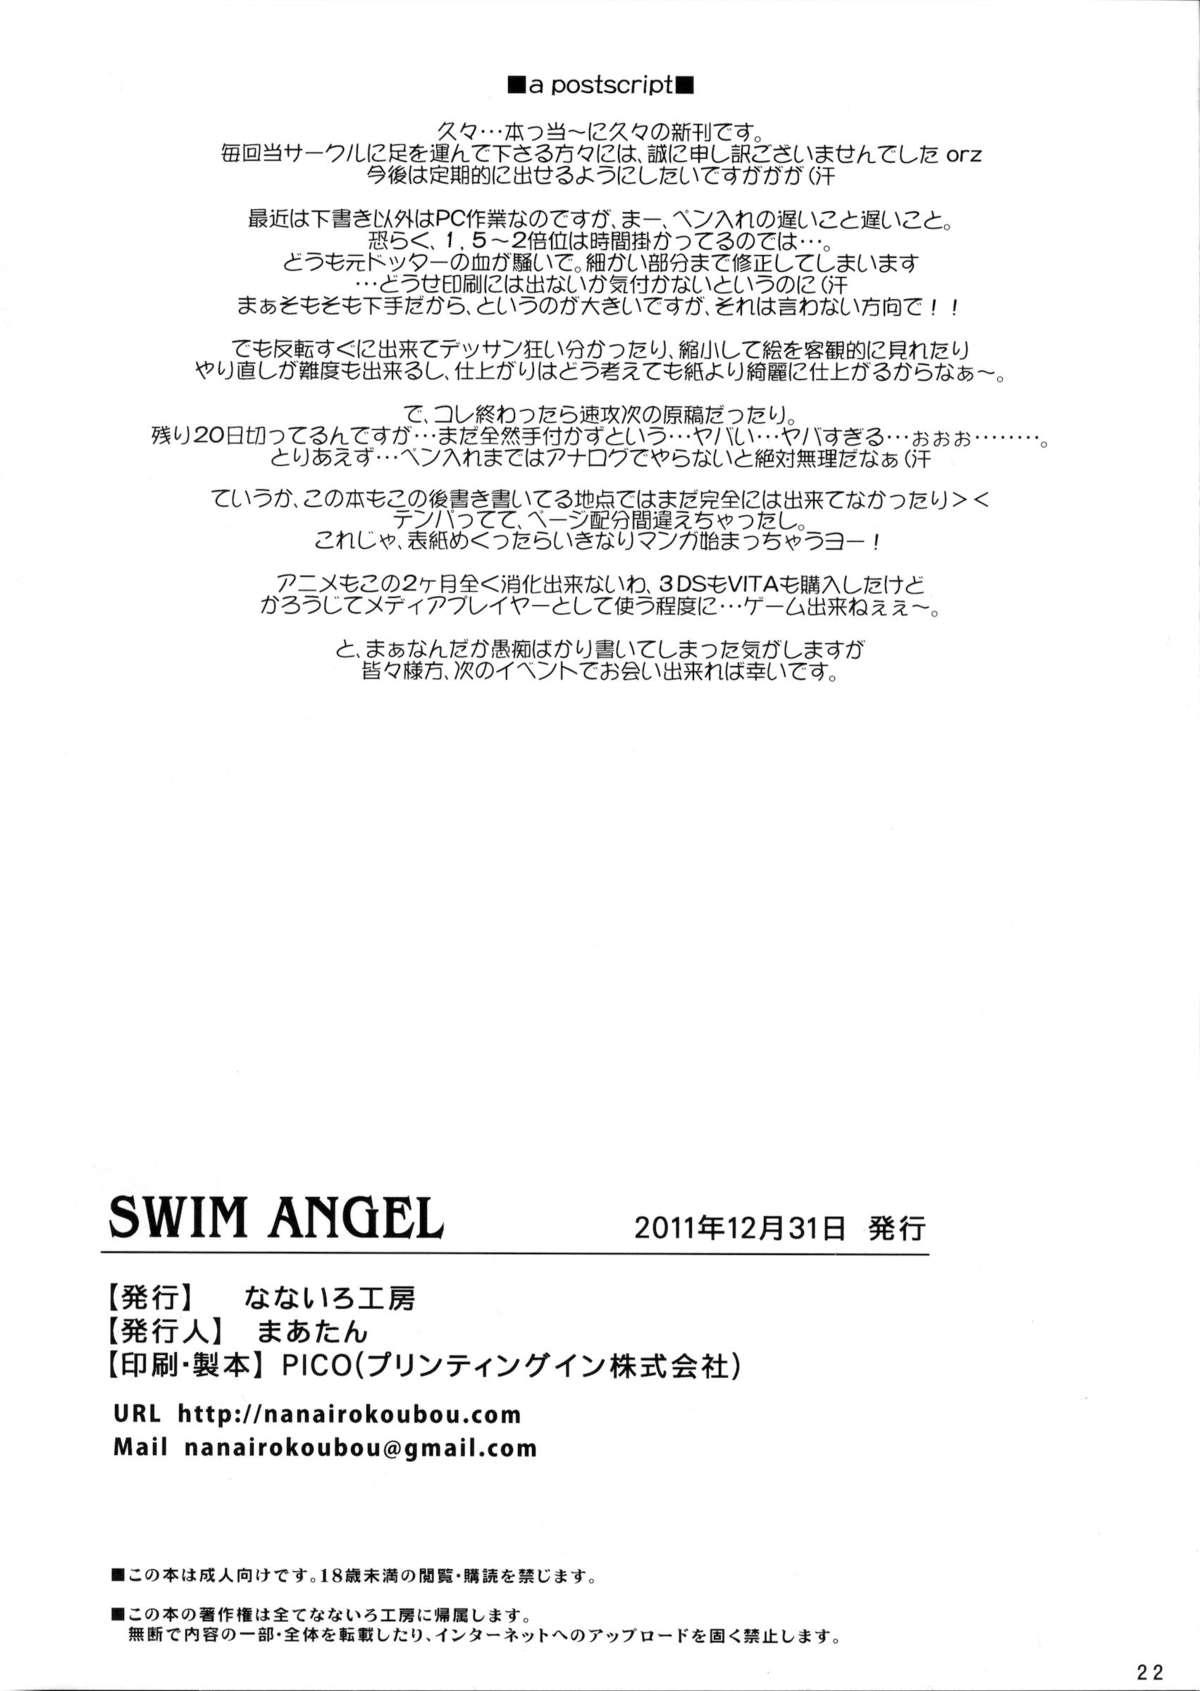 SWIM ANGEL 20